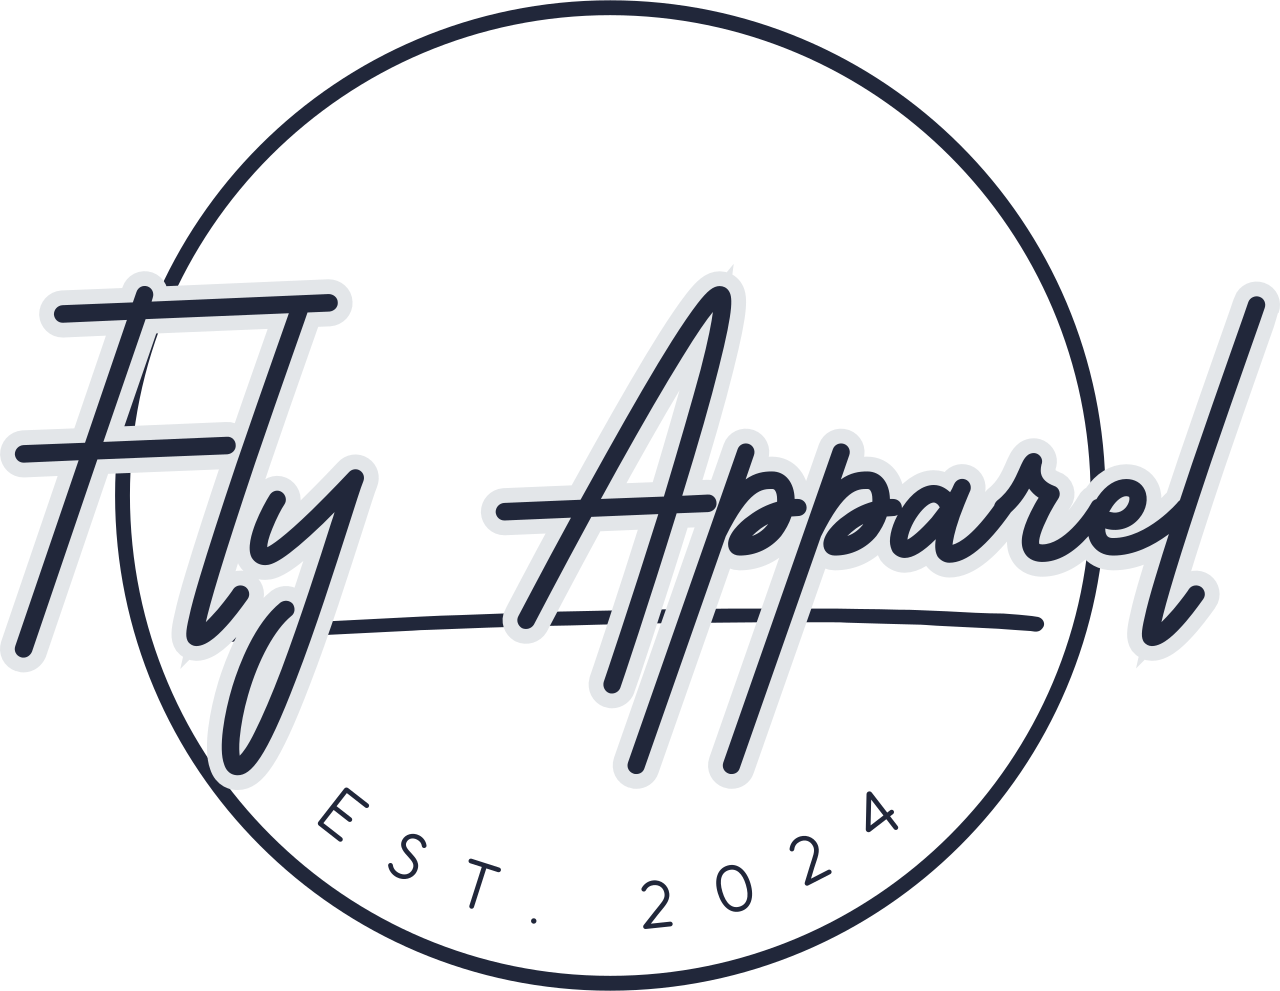 Fly Apparel's logo